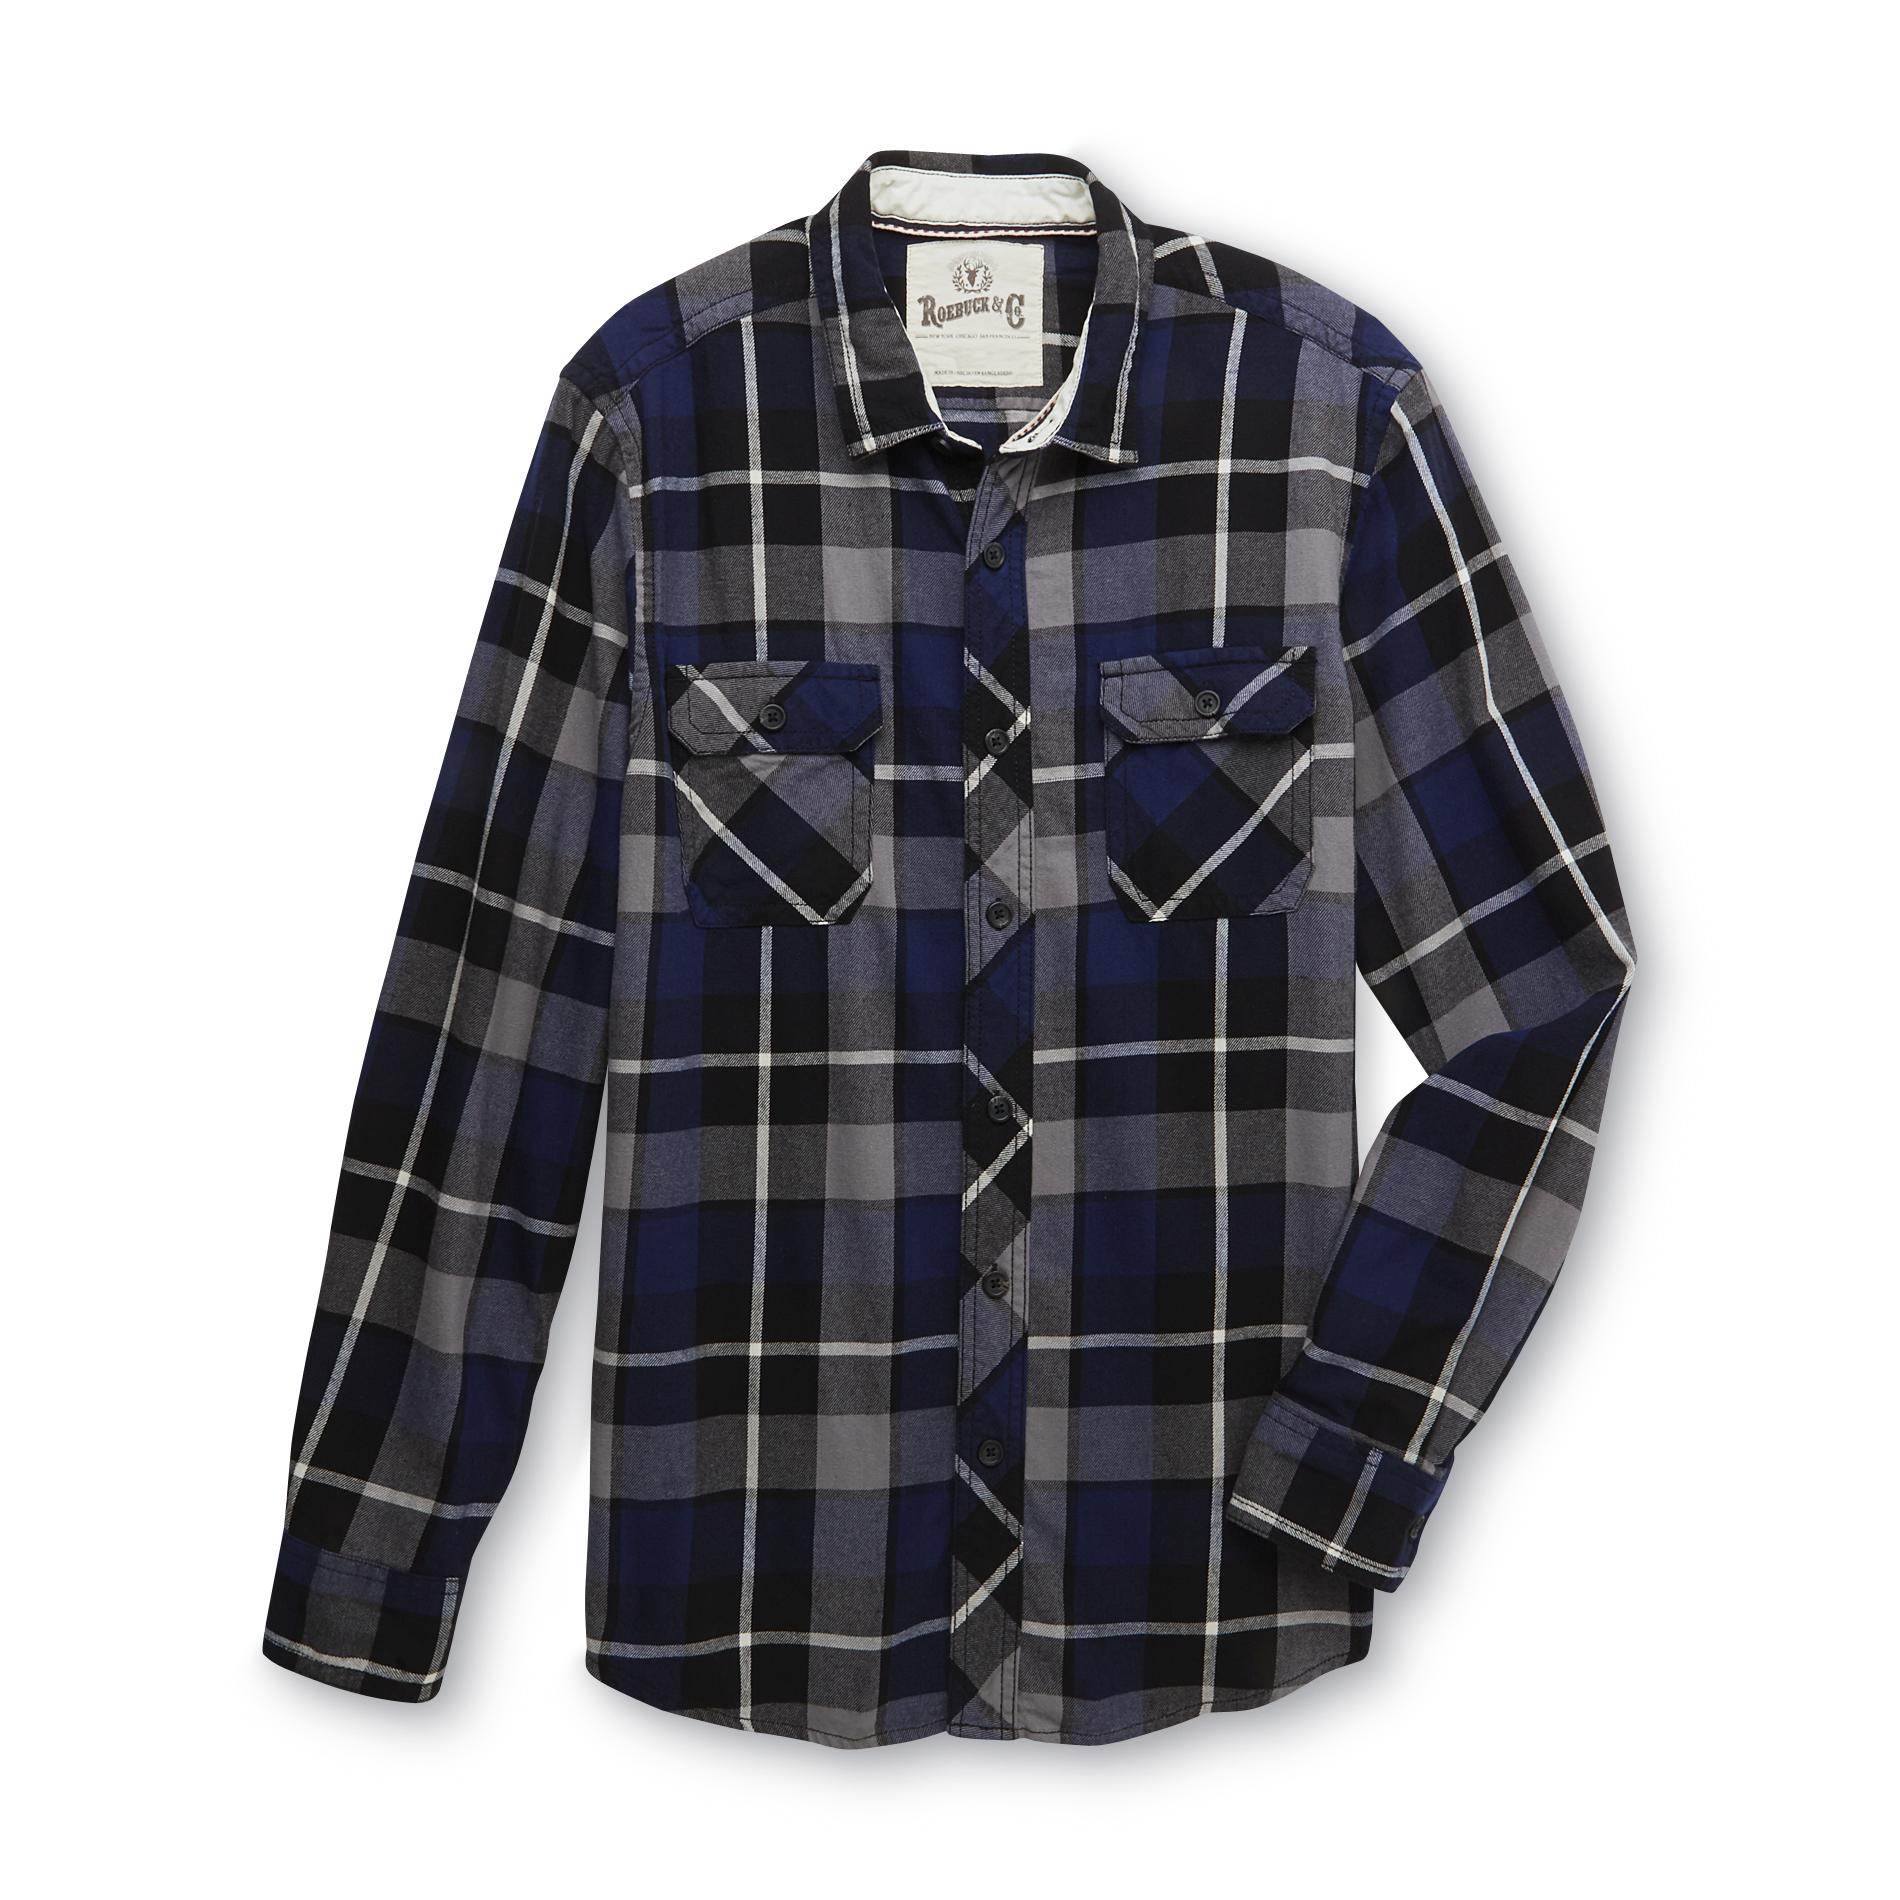 Roebuck & Co. Young Men's Flannel Shirt - Tartan Plaid